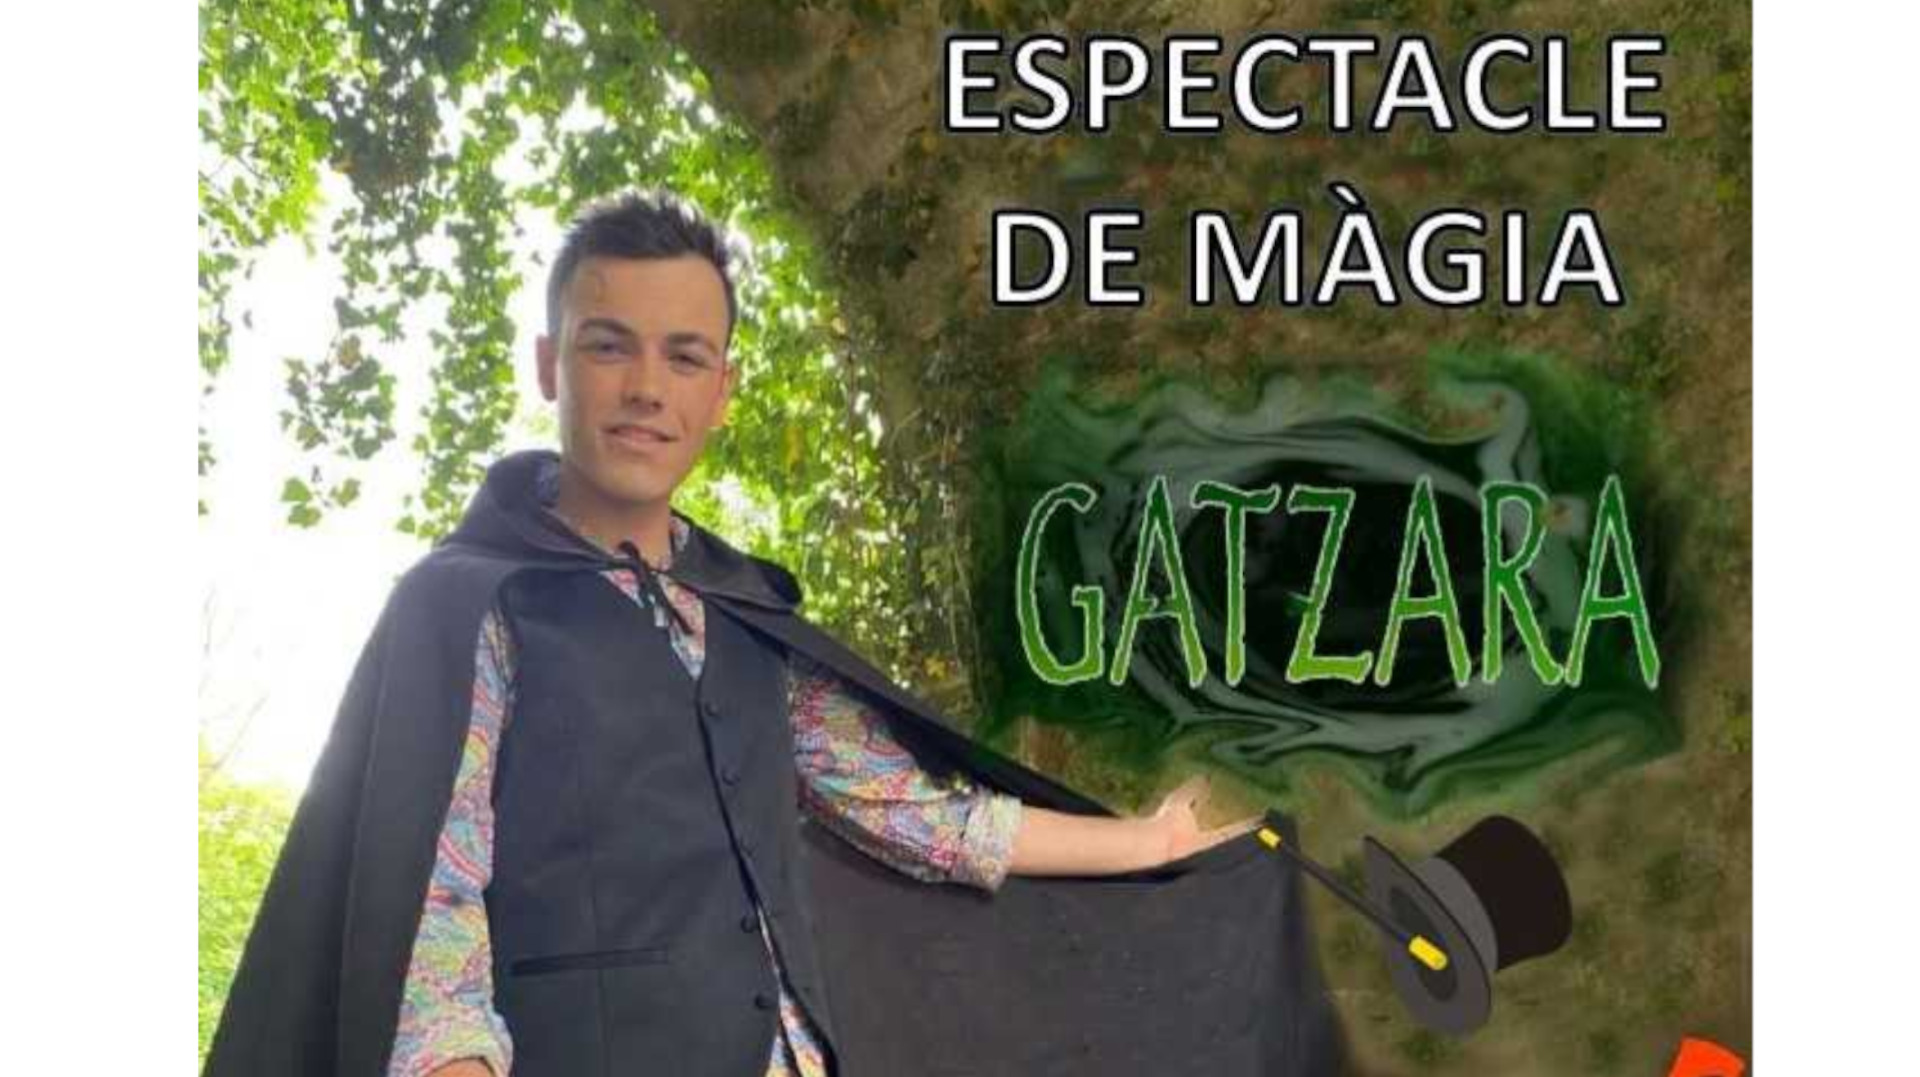 Espectacle de màgia “Gatzara”